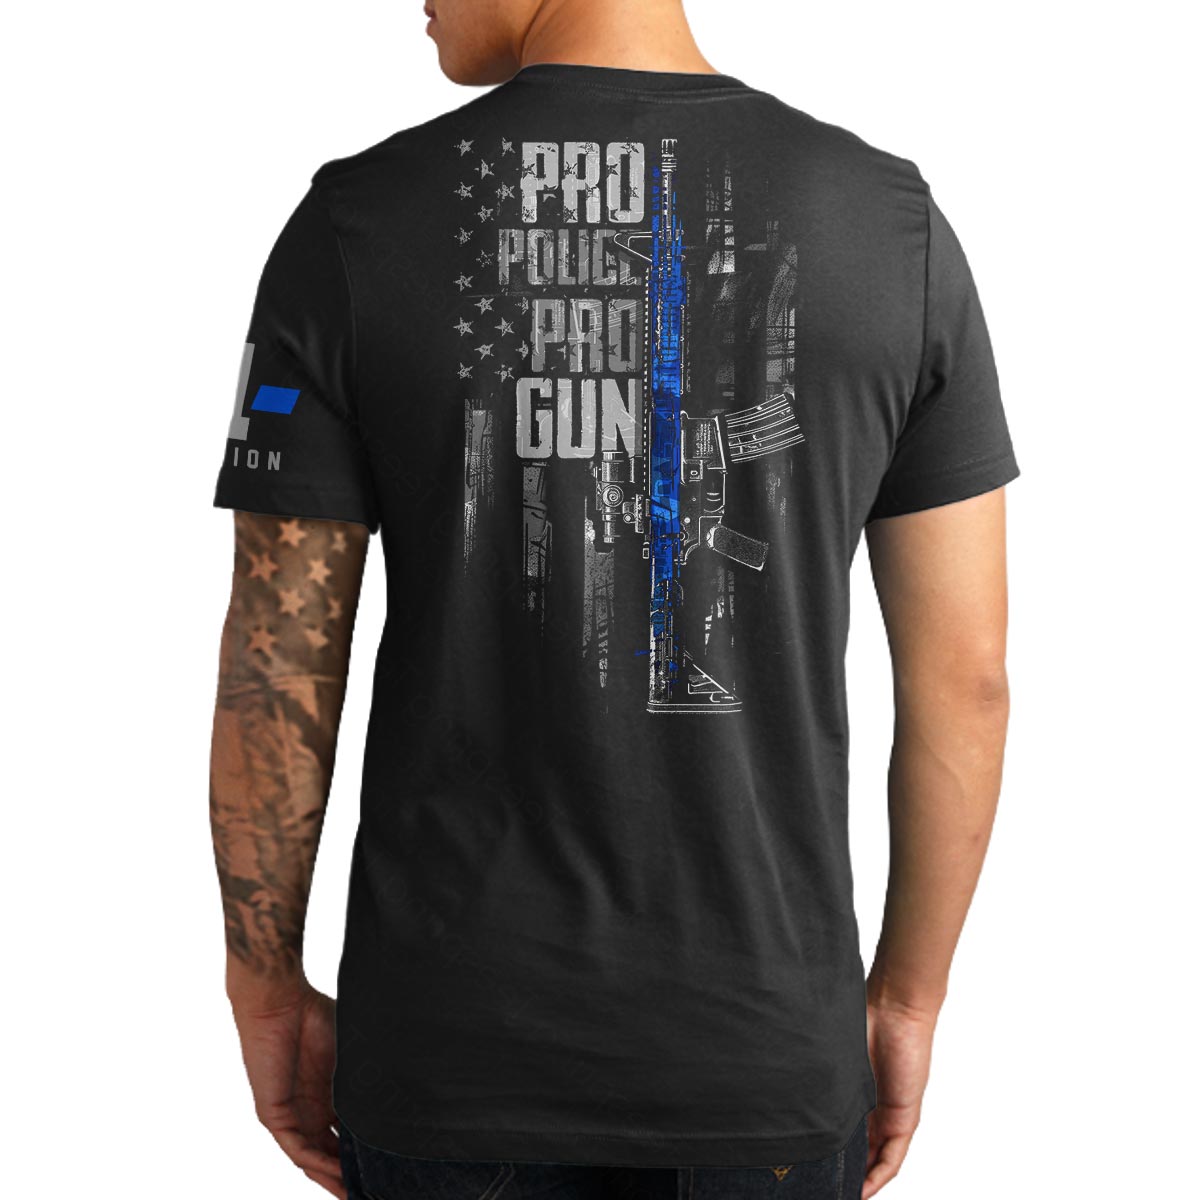 Pro Police Pro Gun